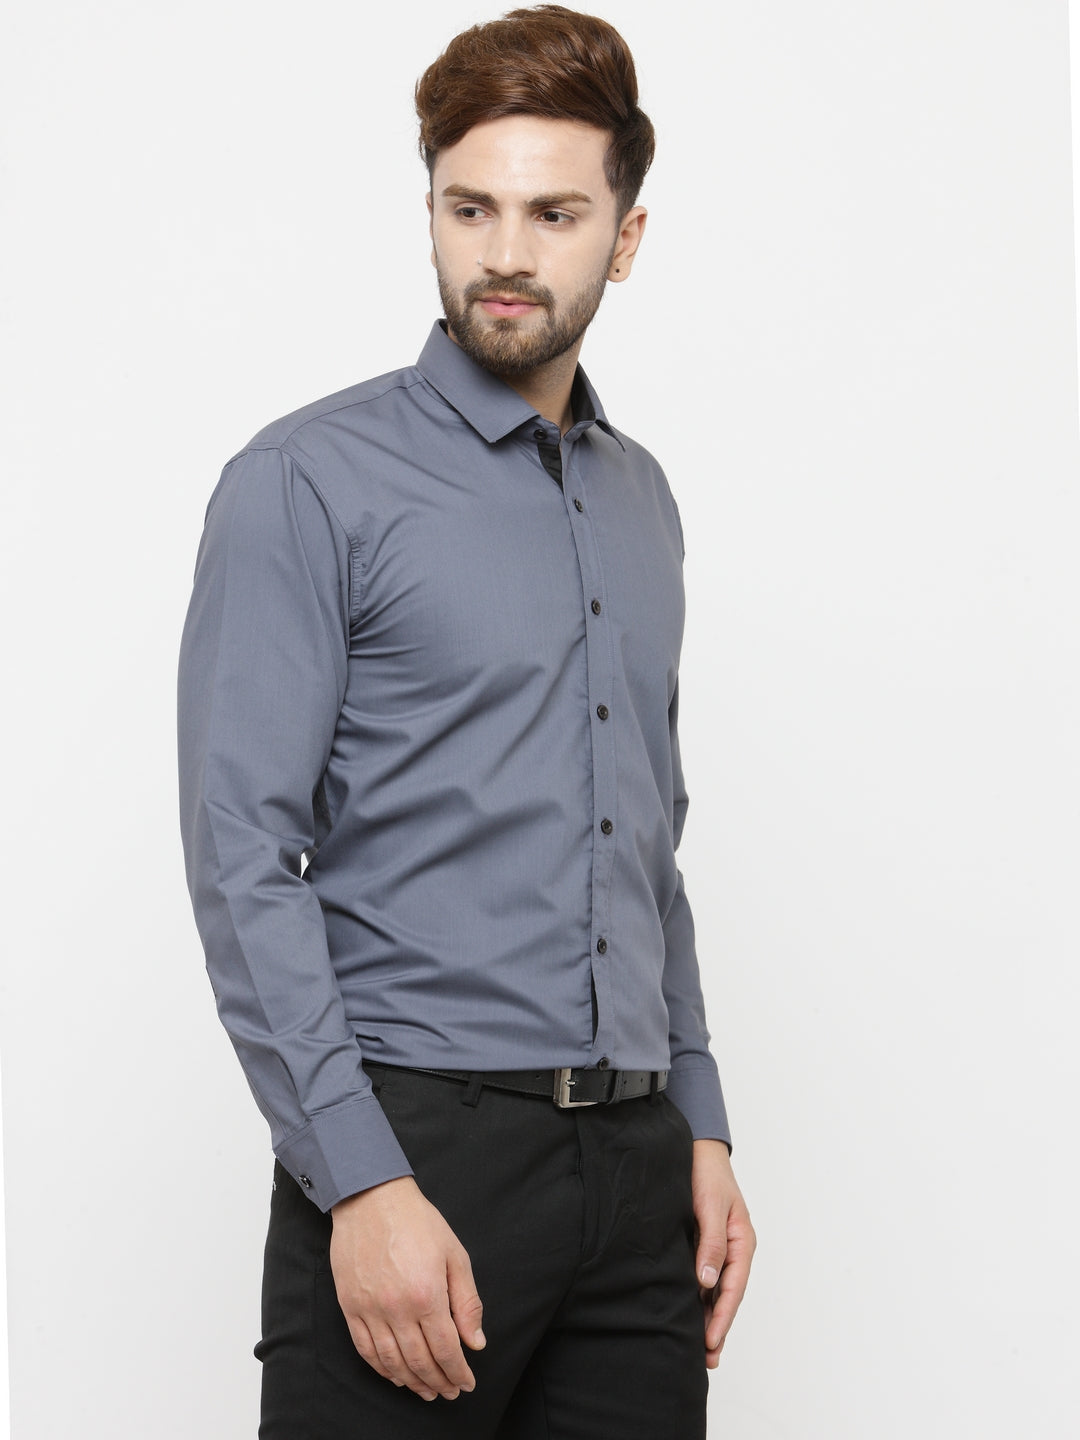 Men's Grey Formal Shirt with black detailing ( SF 411Grey ) - Jainish